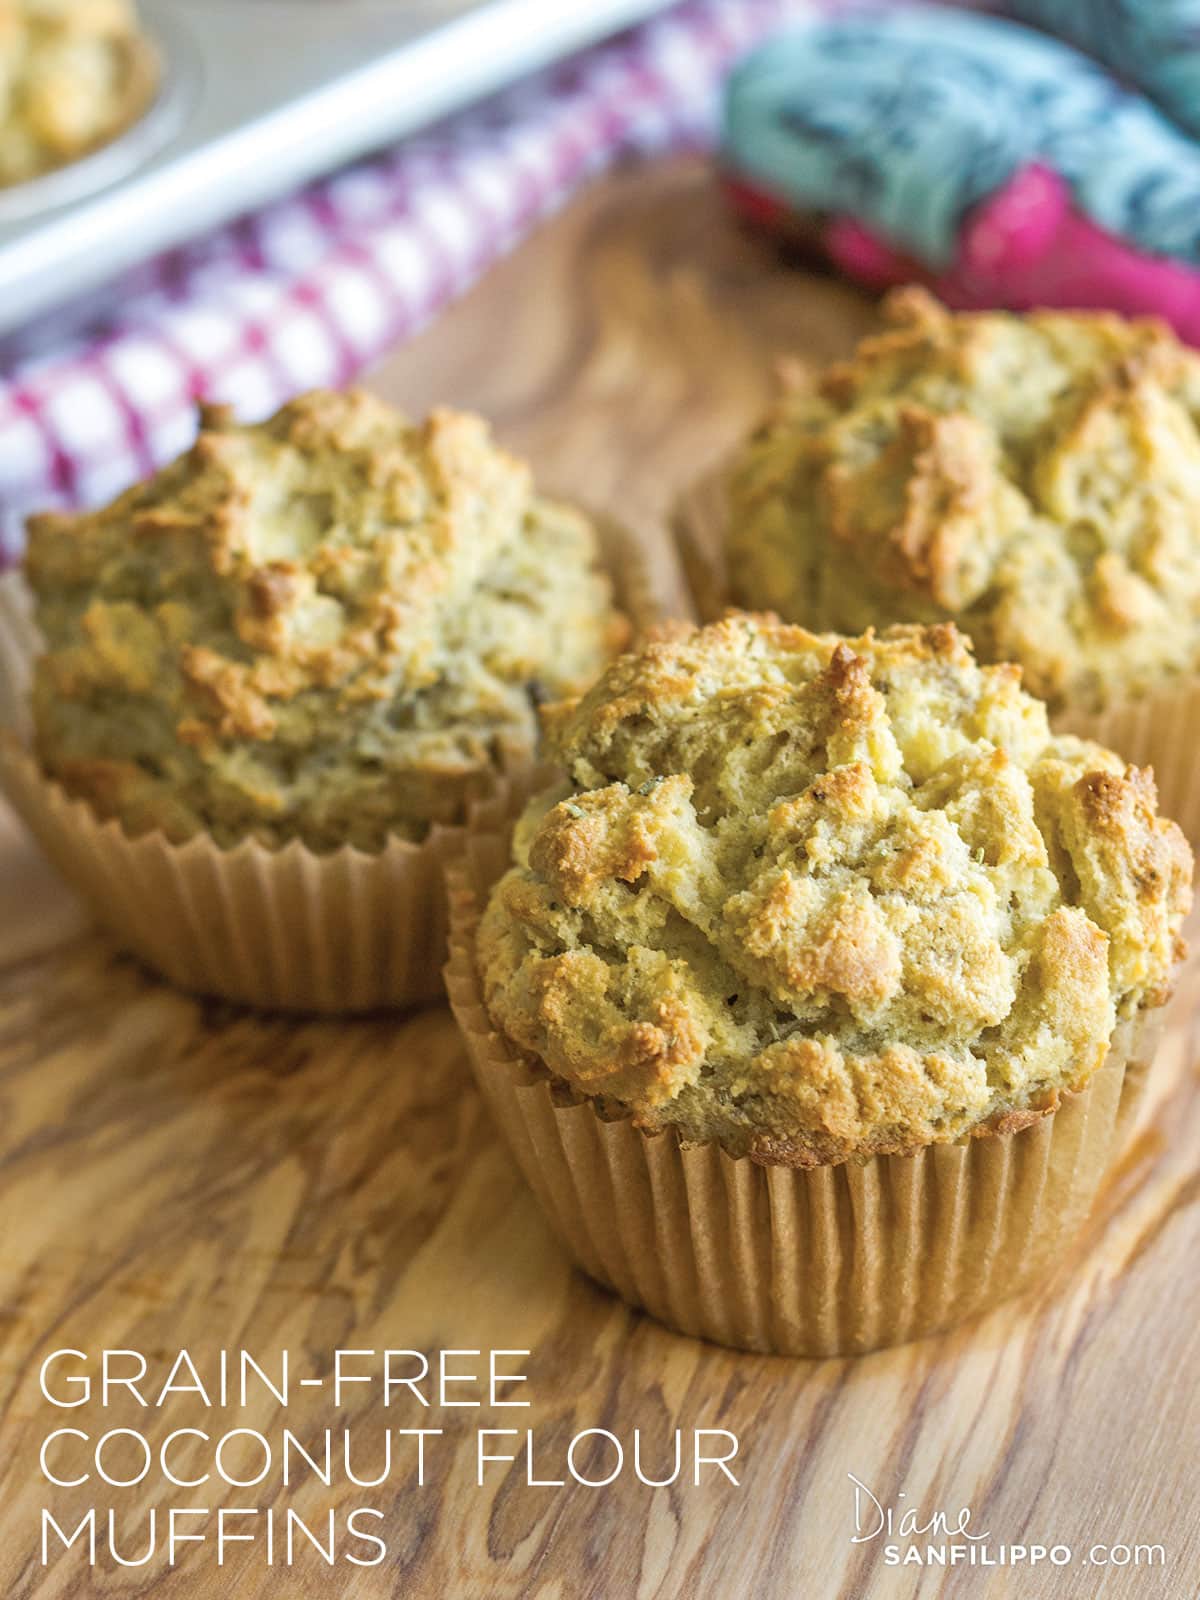 Grain-Free Coconut Flour Muffins | Diane Sanfilippo